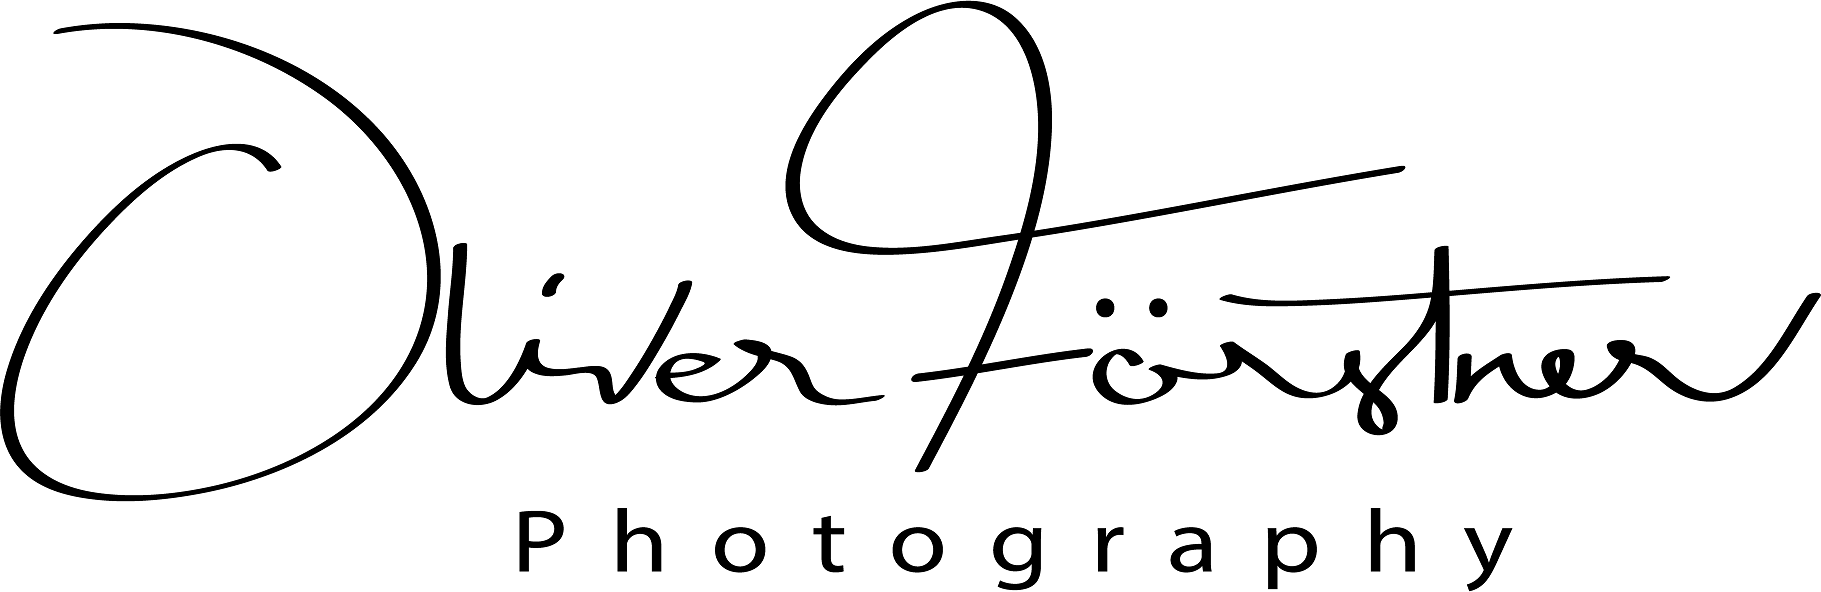 Oliver Förstner Photography